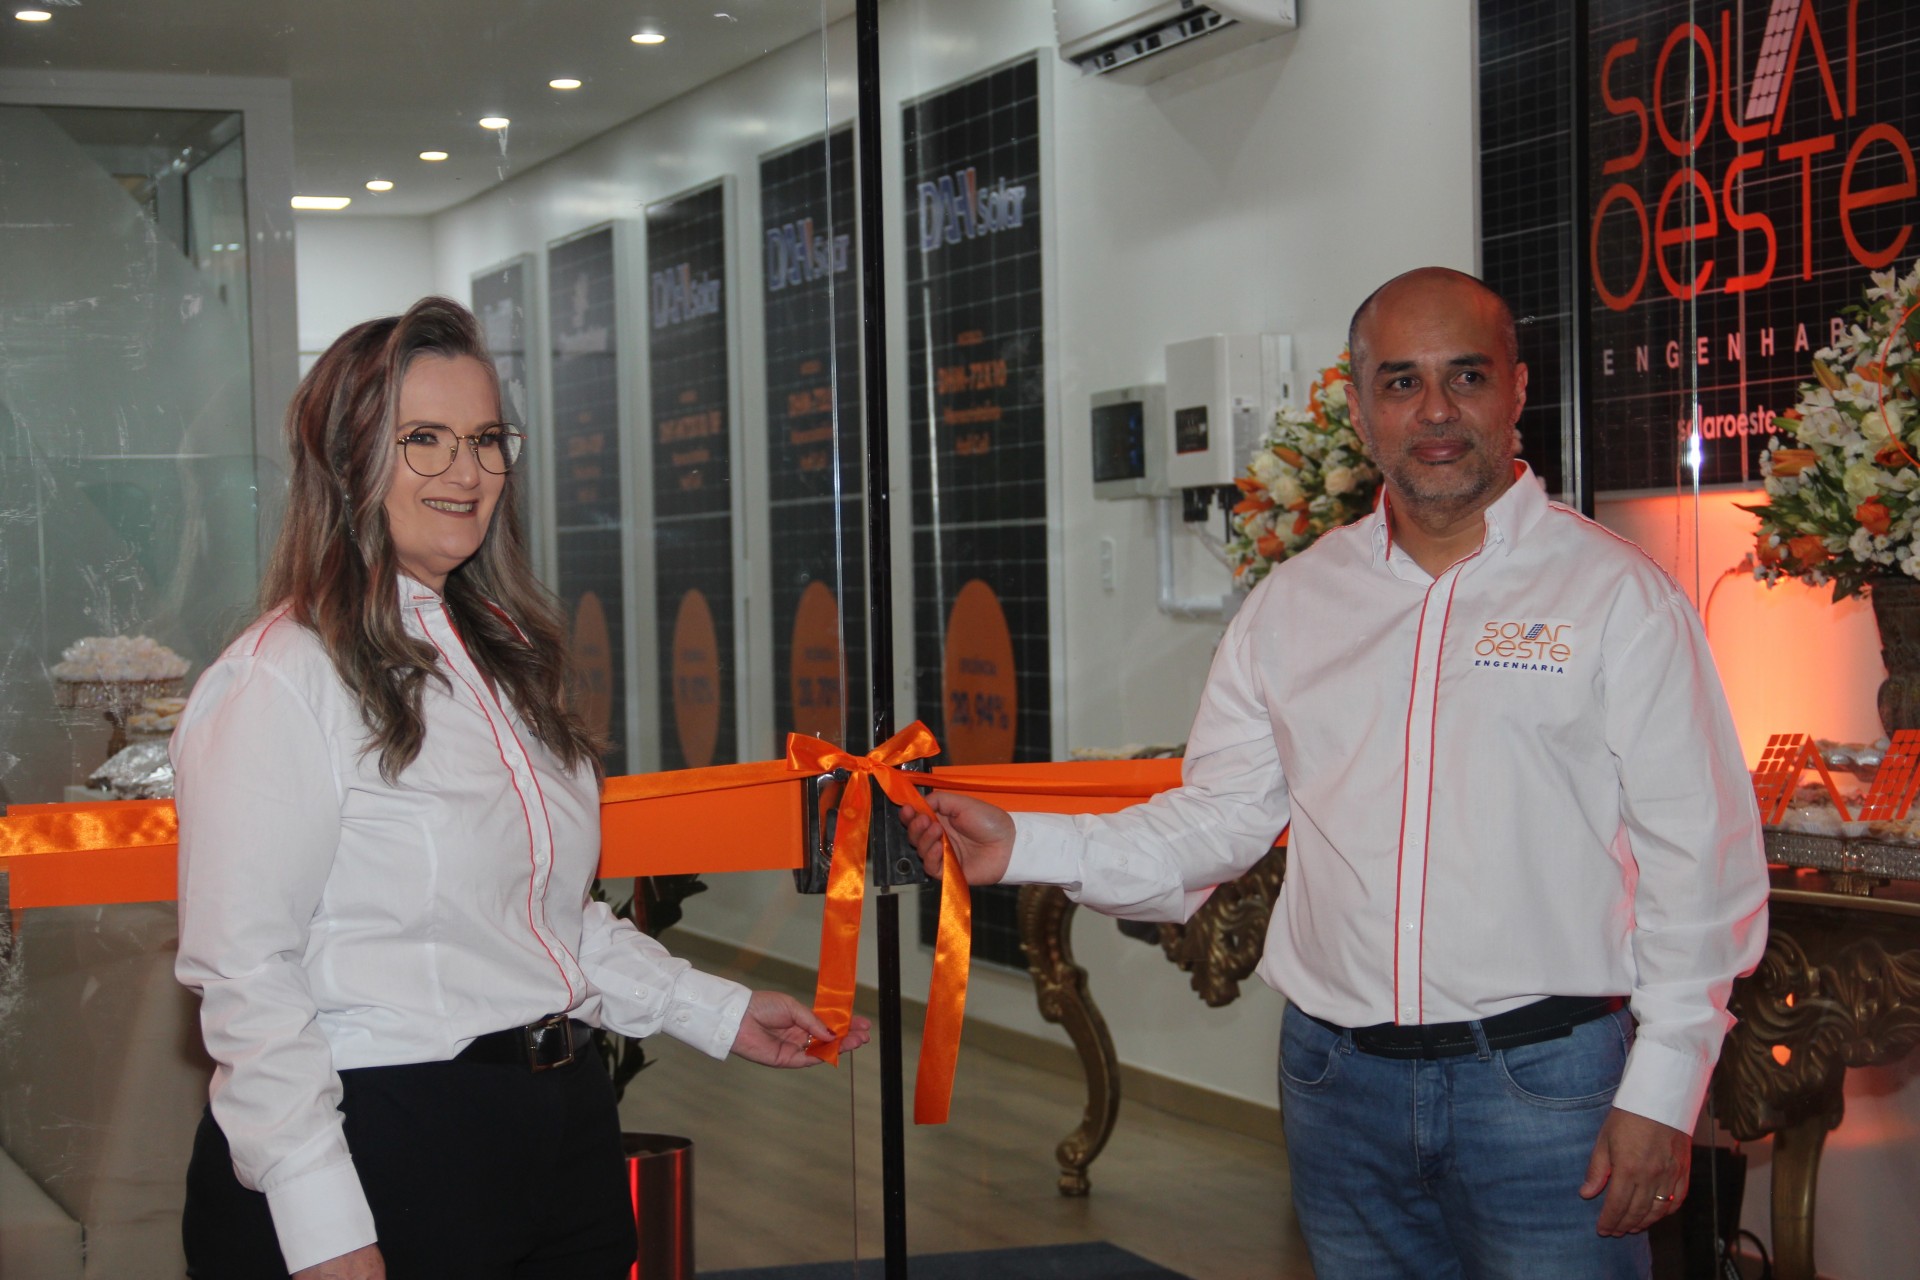 Solar Oeste Engenharia inaugura nova loja em Missal